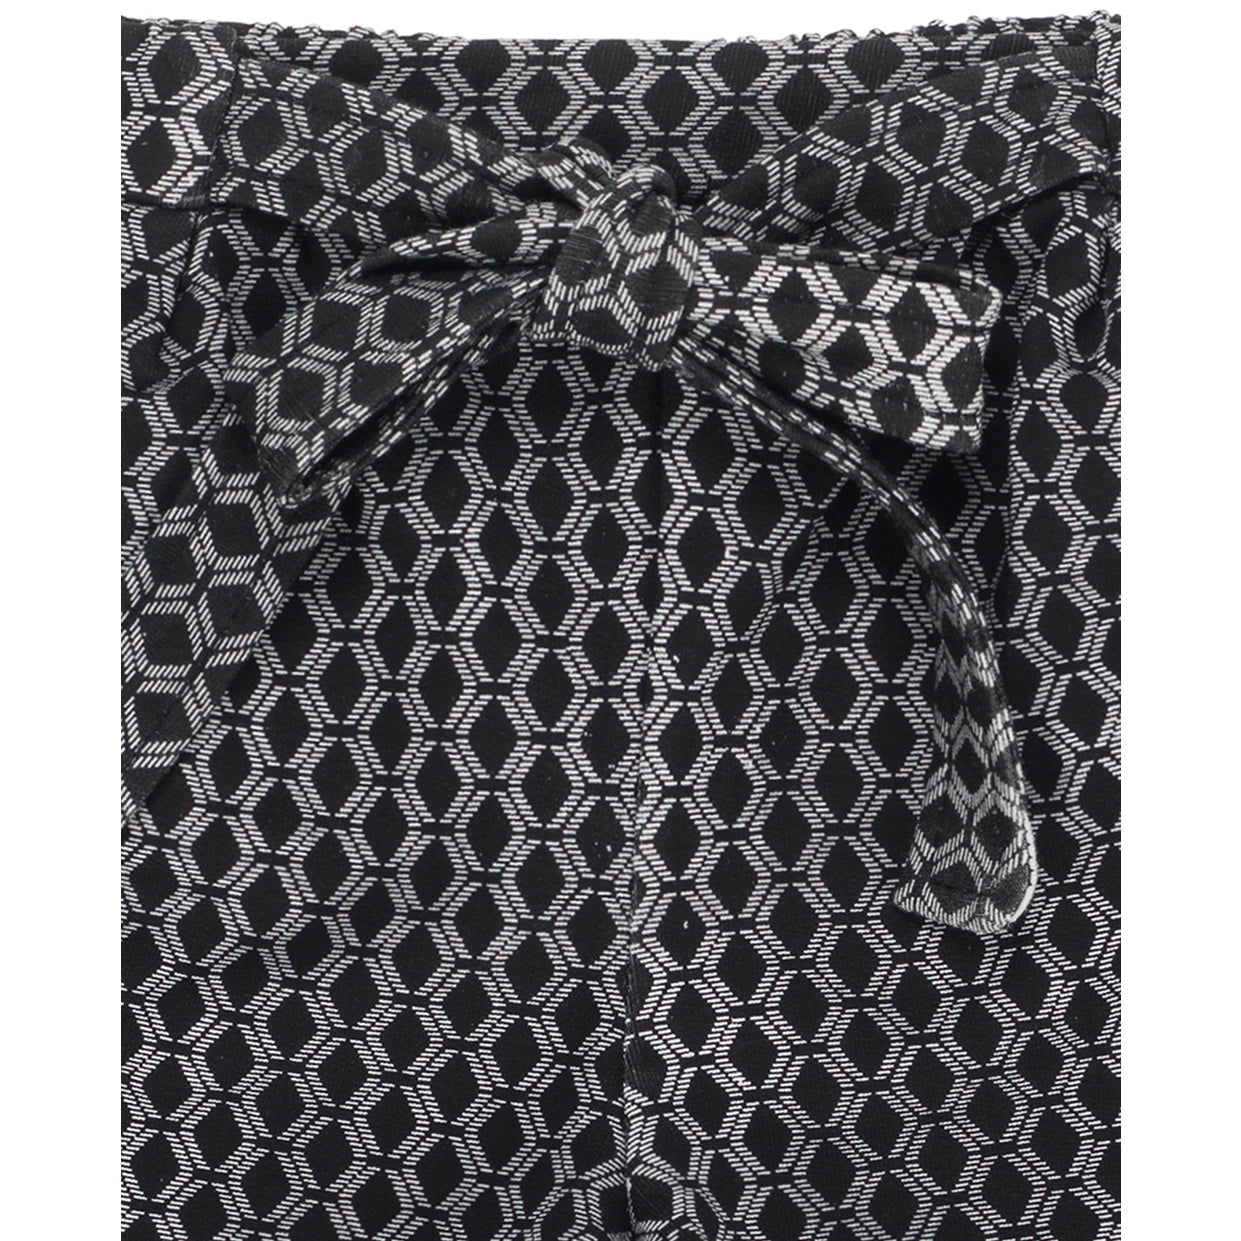 Girl's shorts in black and ecru printed elastic fleece.